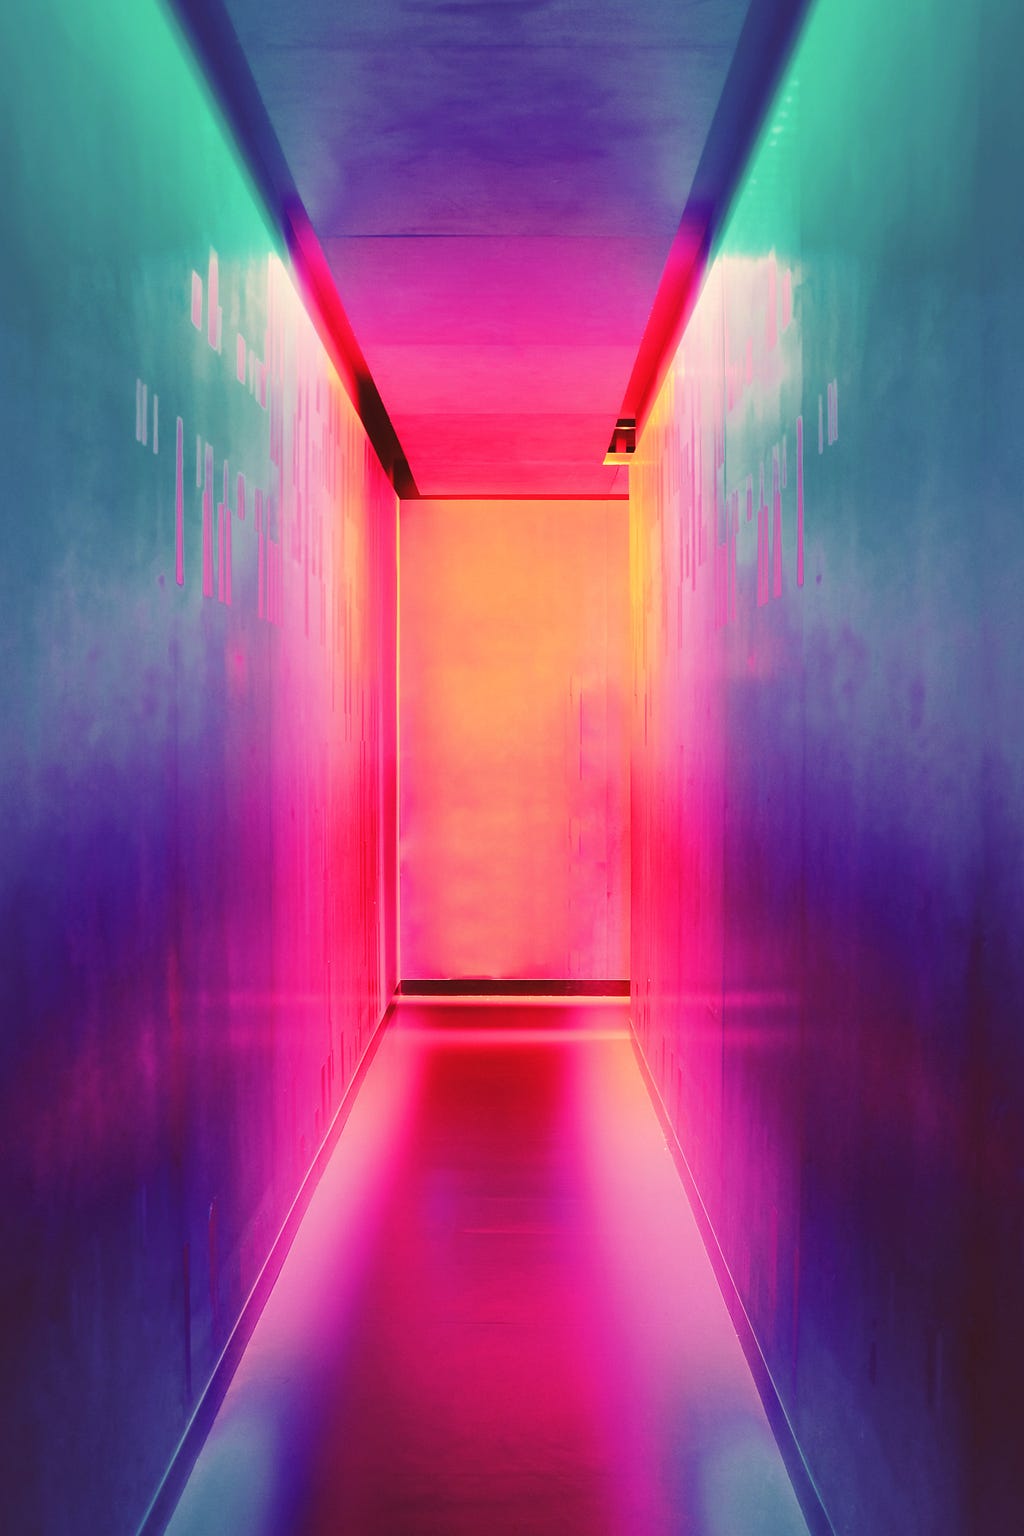 A rainbow-colored hallway